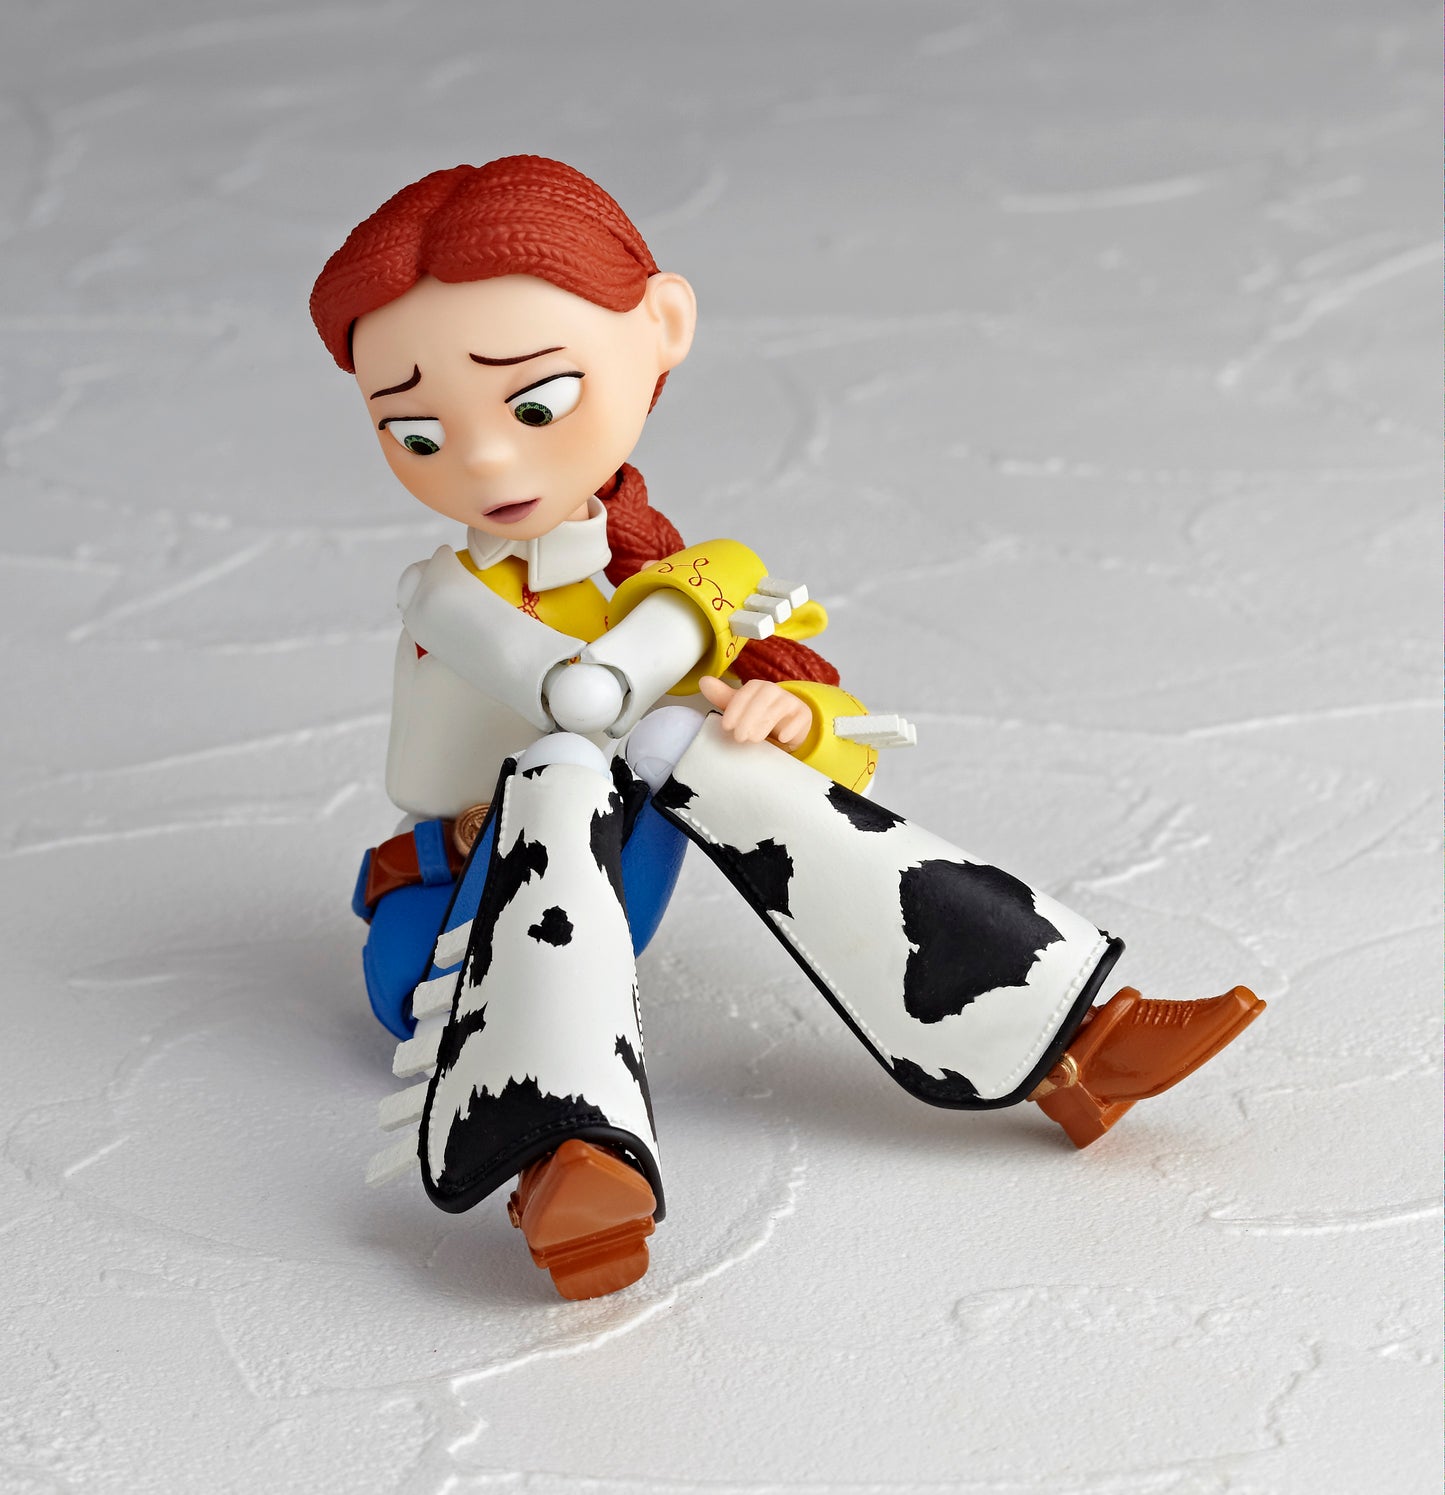 Revoltech "Toy Story" Jessie Ver. 1.5